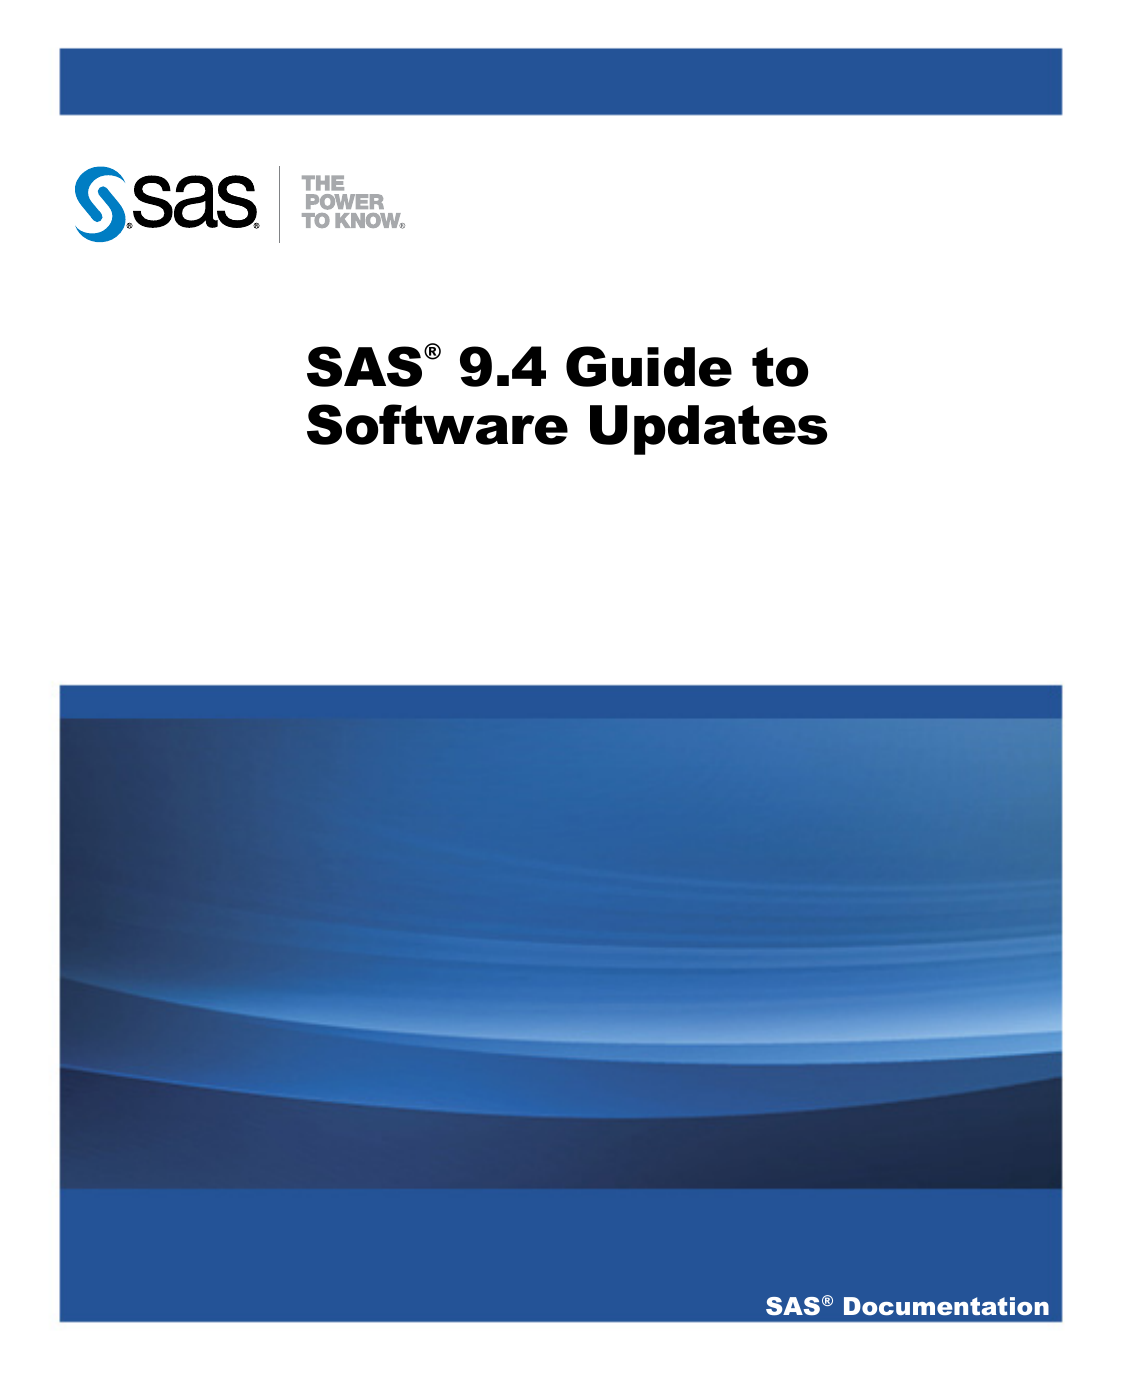 sas 9.2 software free download torrent